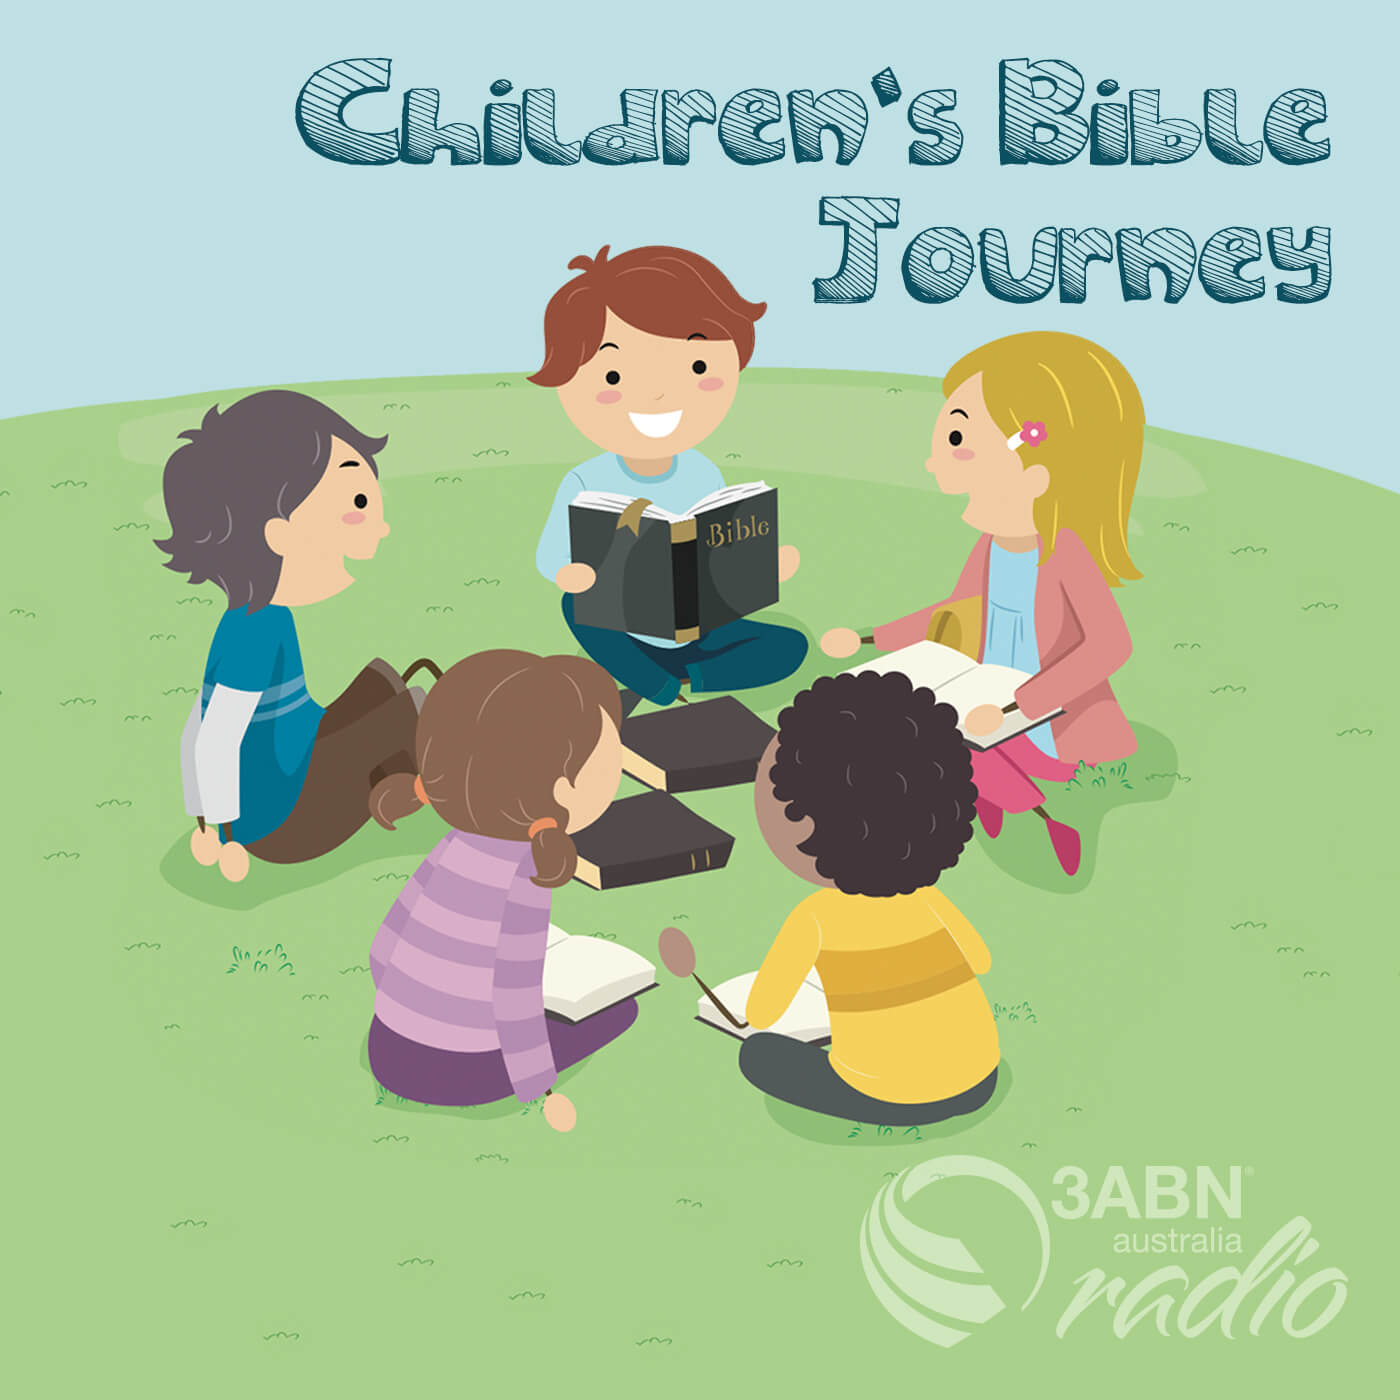 Children's Bible Journey - 2200